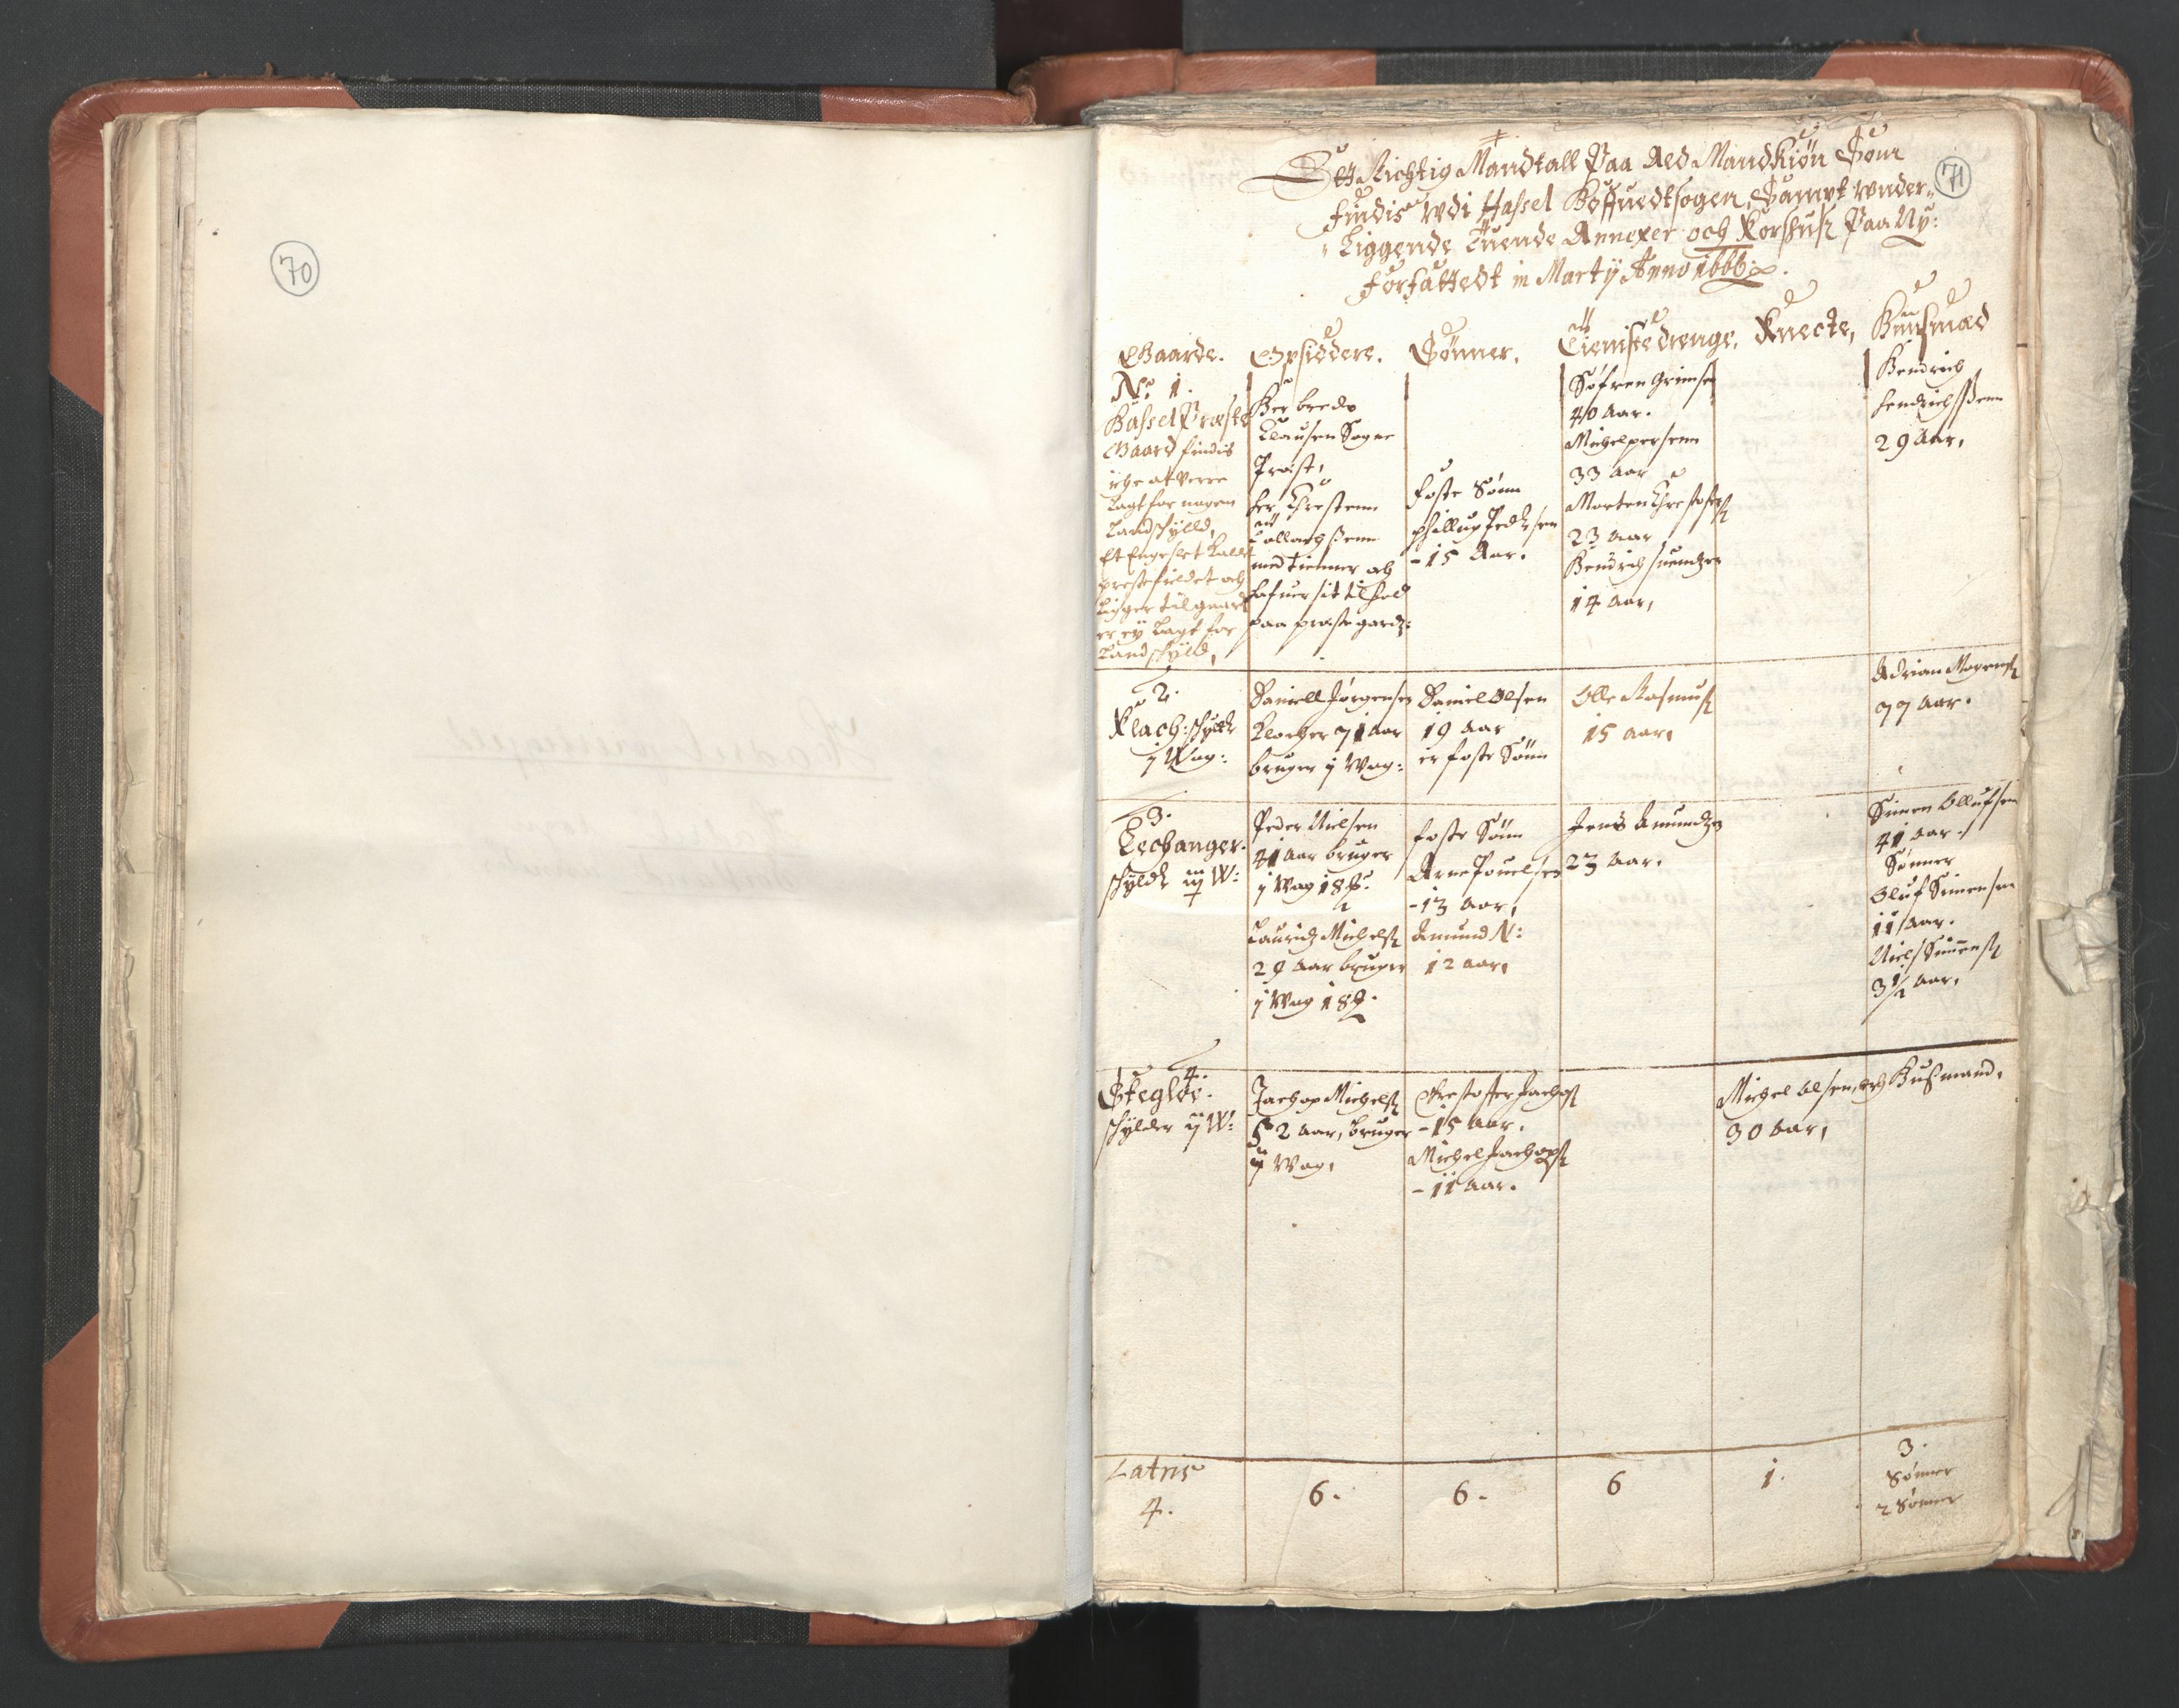 RA, Vicar's Census 1664-1666, no. 36: Lofoten and Vesterålen deanery, Senja deanery and Troms deanery, 1664-1666, p. 70-71